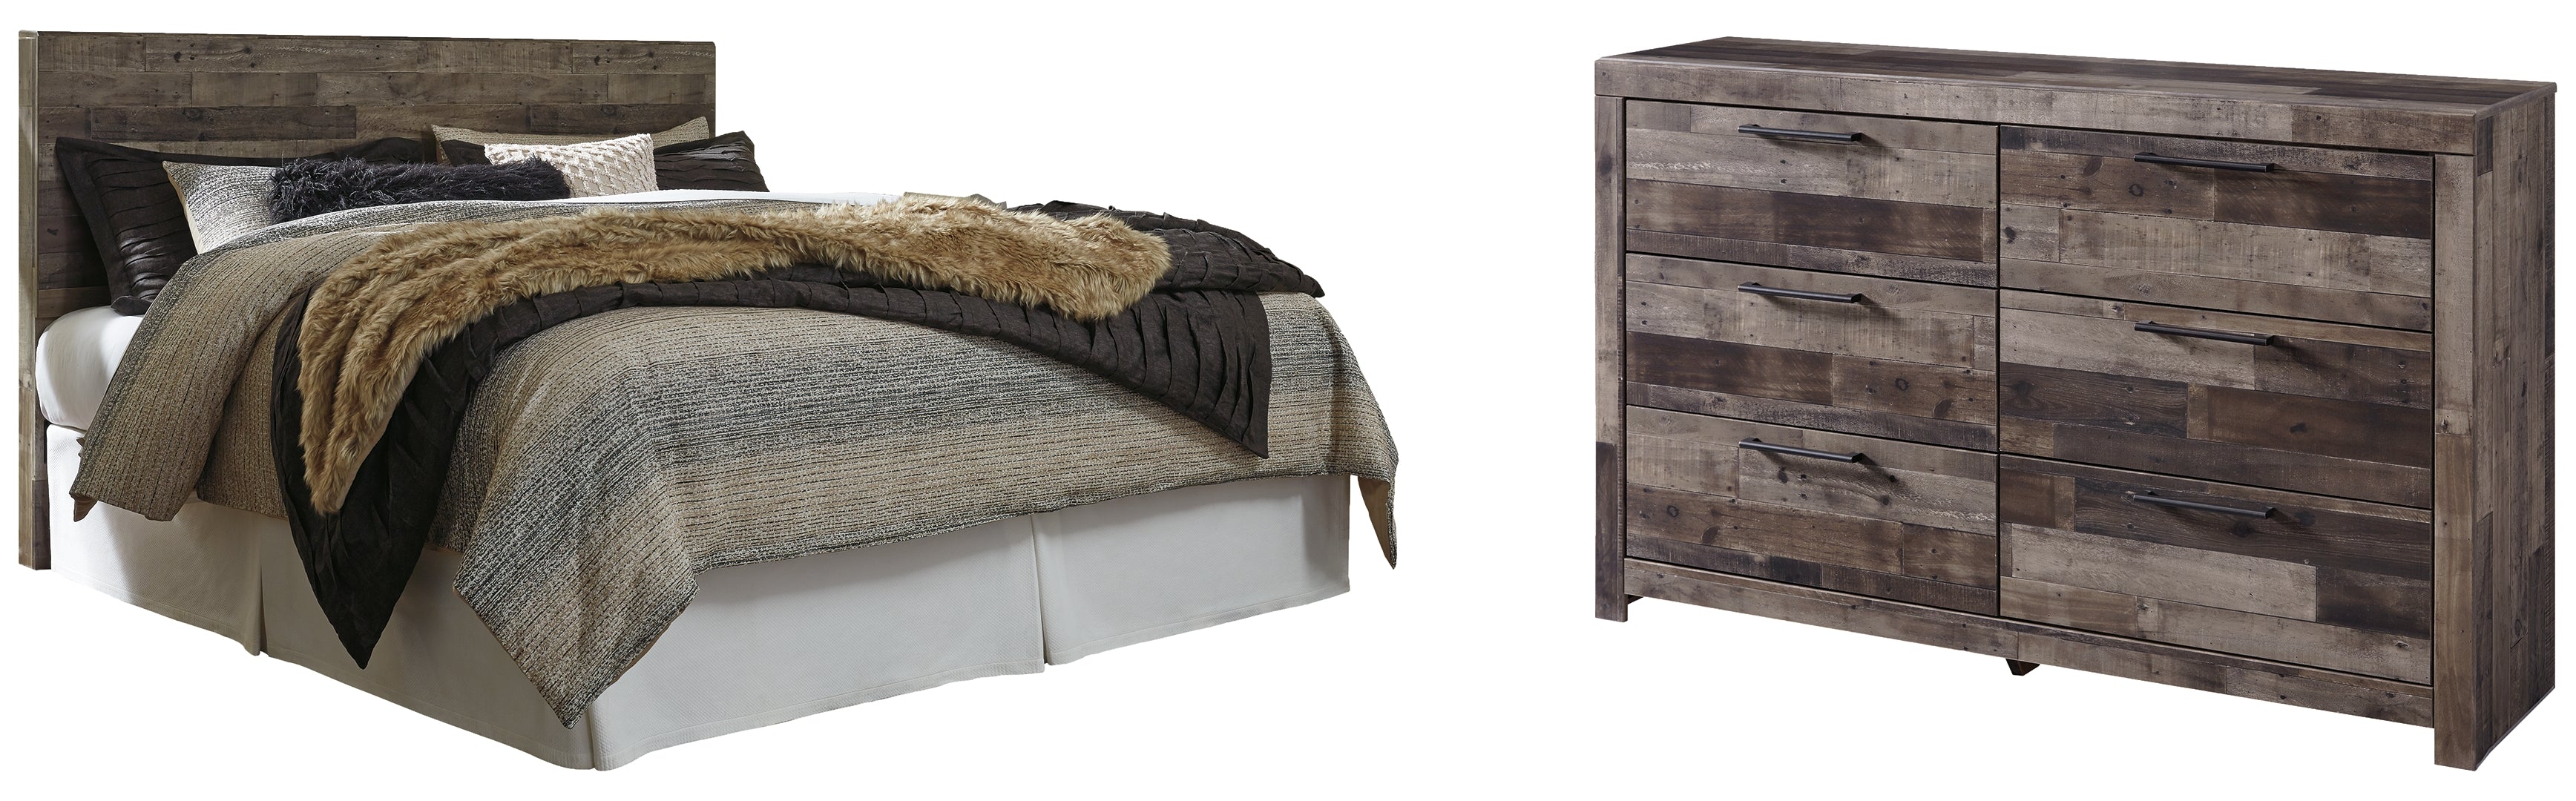 Derekson King Panel Headboard Bed with Dresser